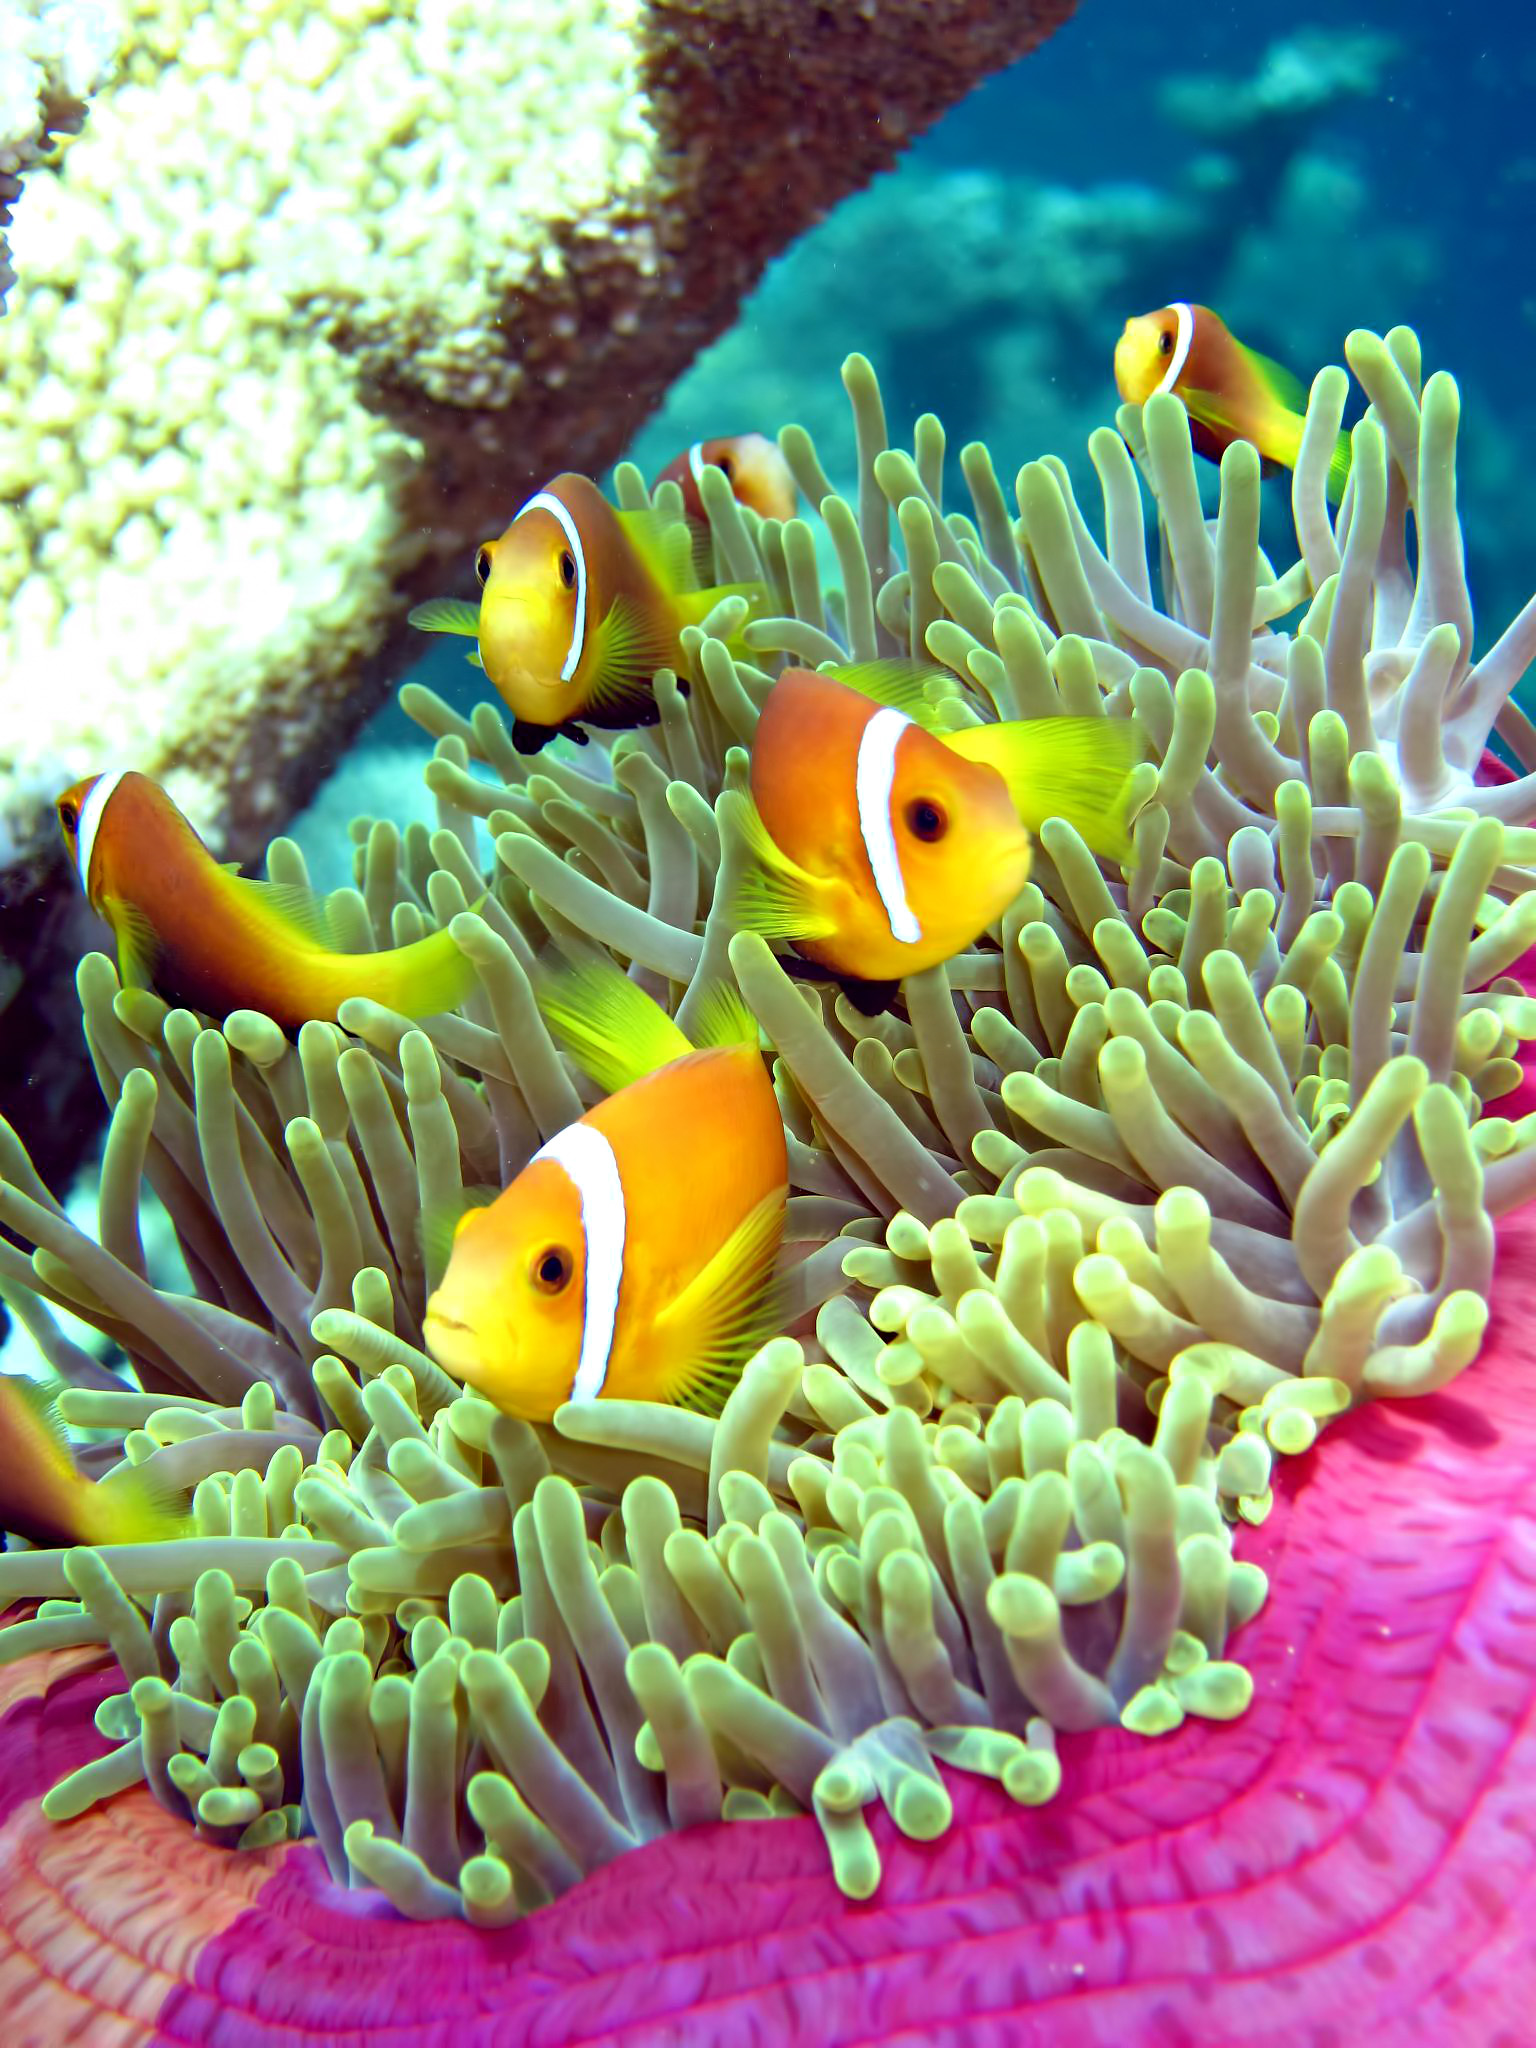 074 – W Maldives Resort – Fesdu Island, Maldives – Tropical Ocean Yellow Fish